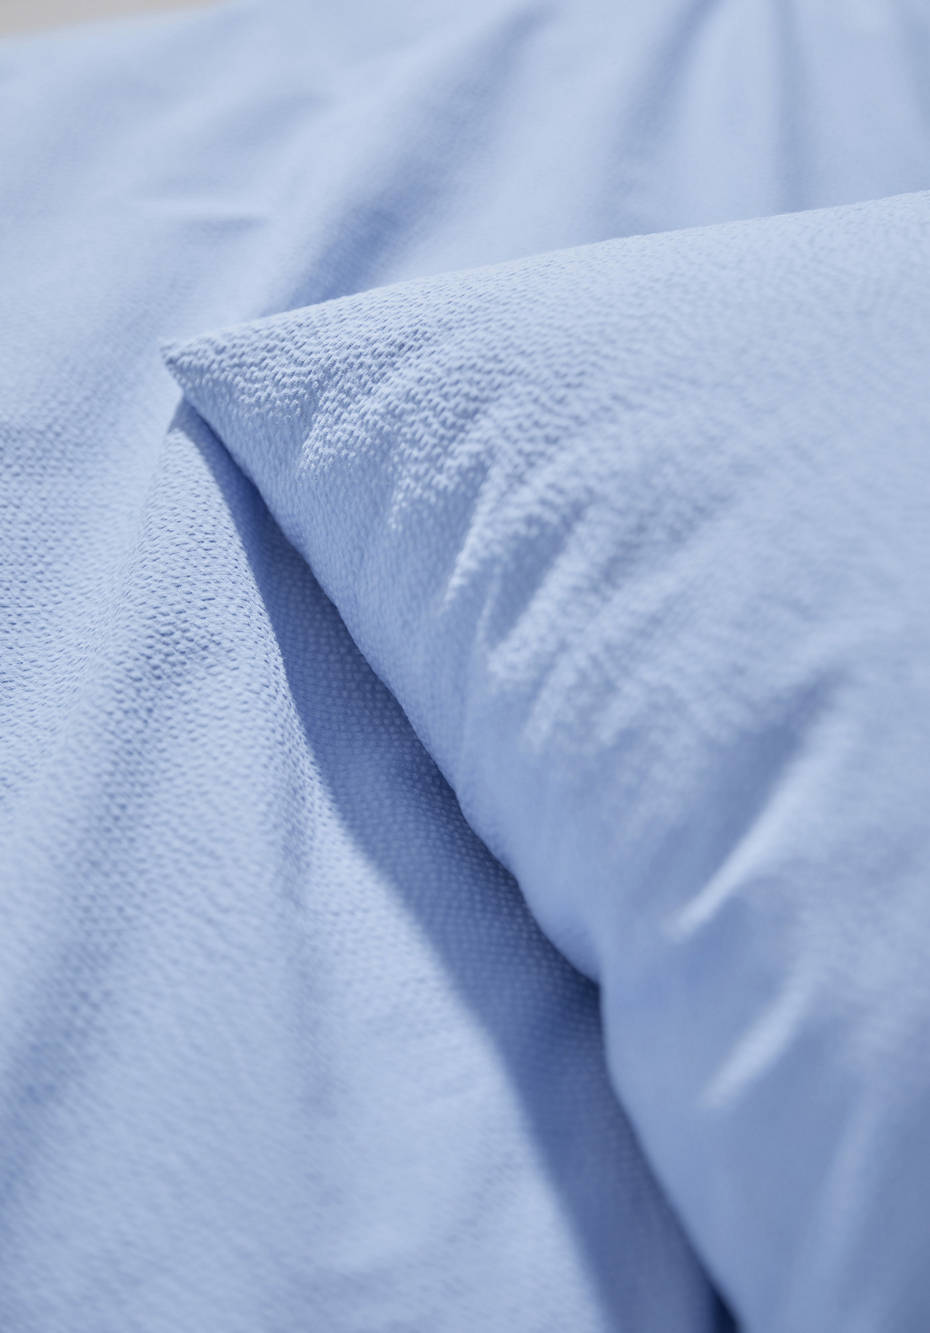 Seersucker bedding set made from pure organic cotton